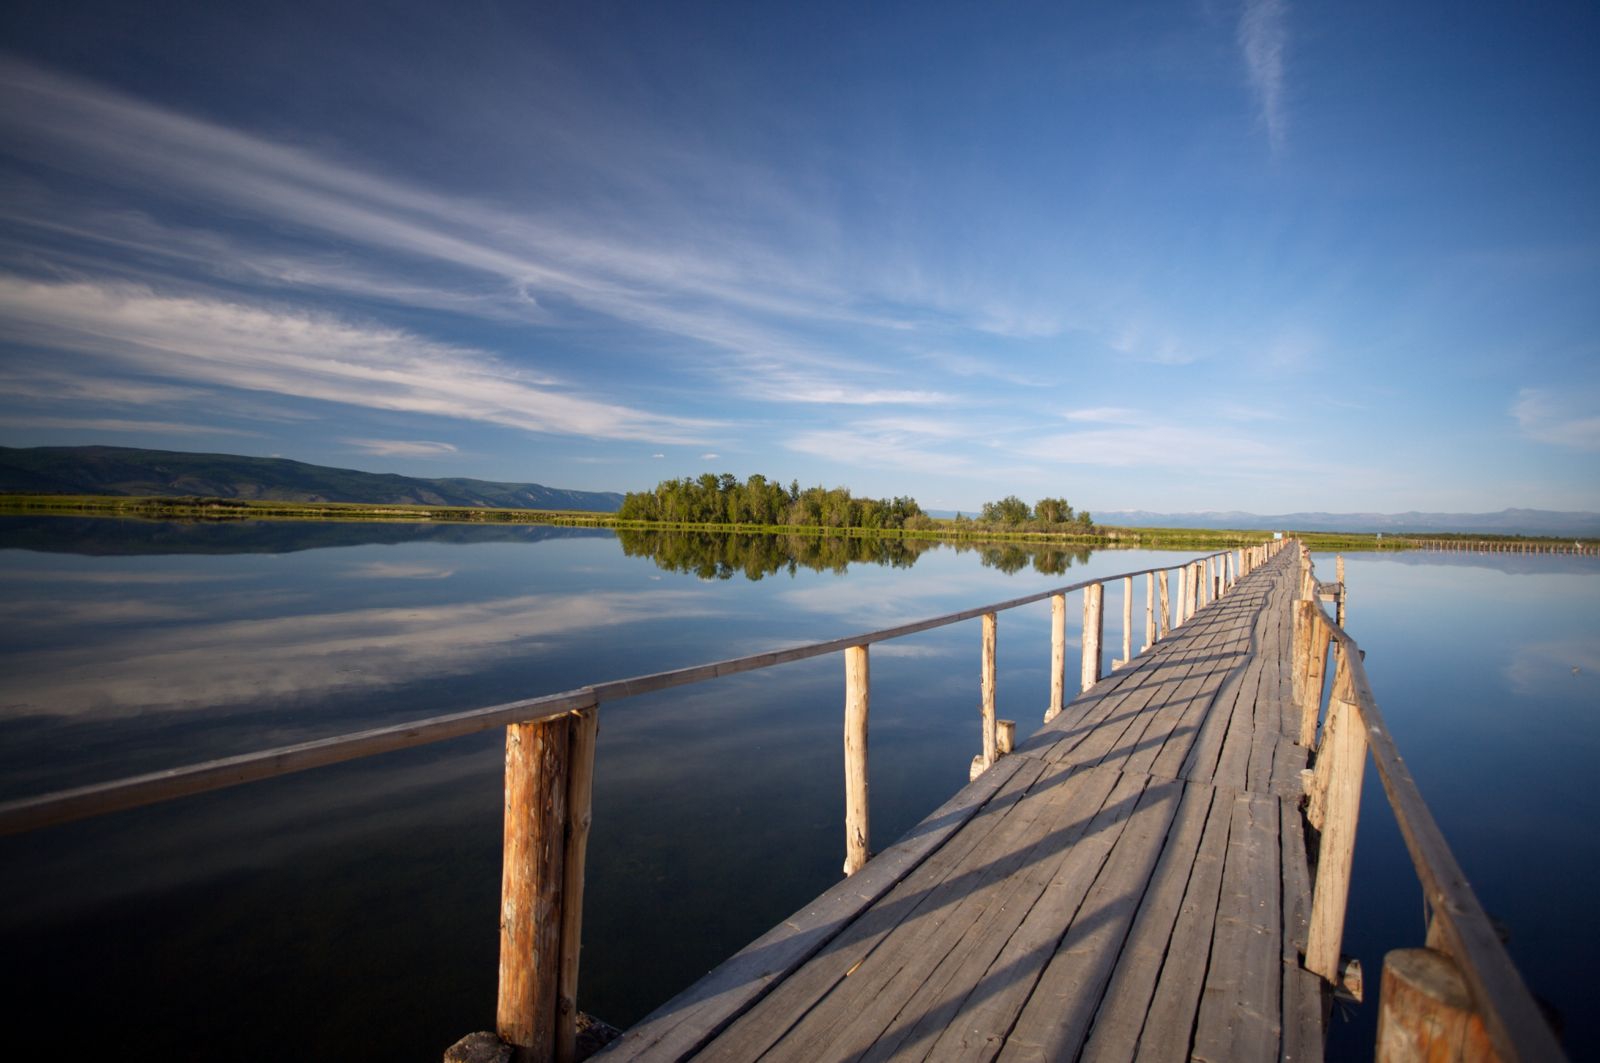  Загадочное озеро сибири-тере-холь природа, сибирь